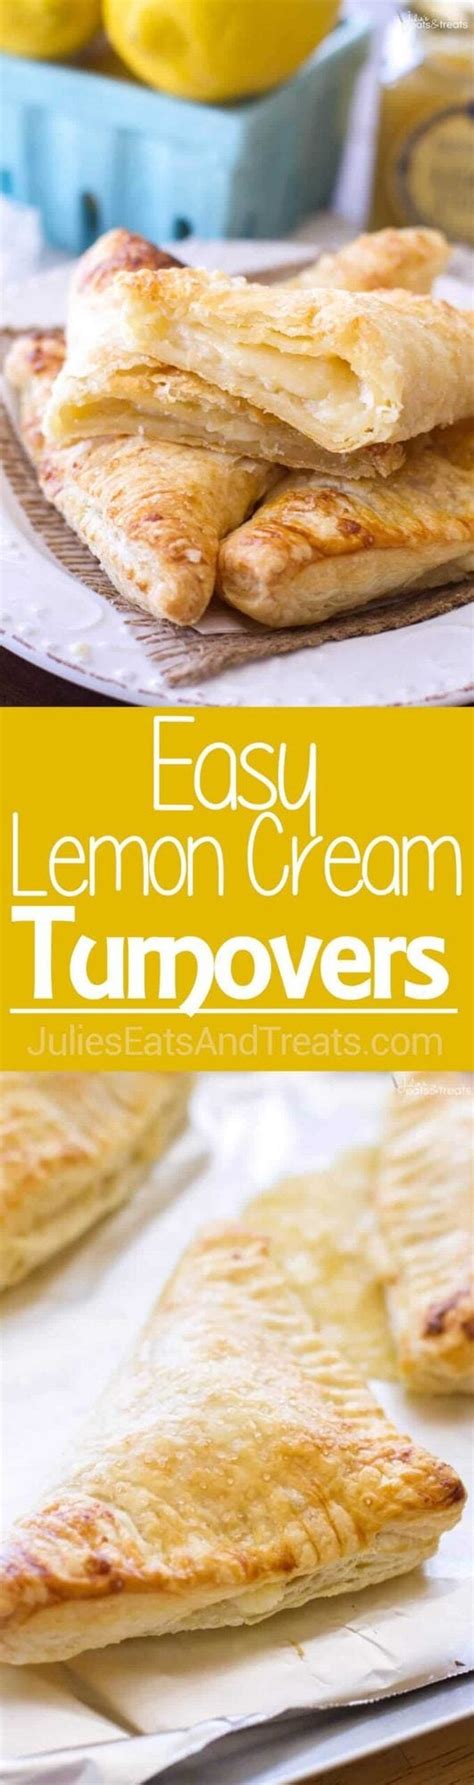 Lemon Cream Turnovers Recipe Julies Eats And Treats